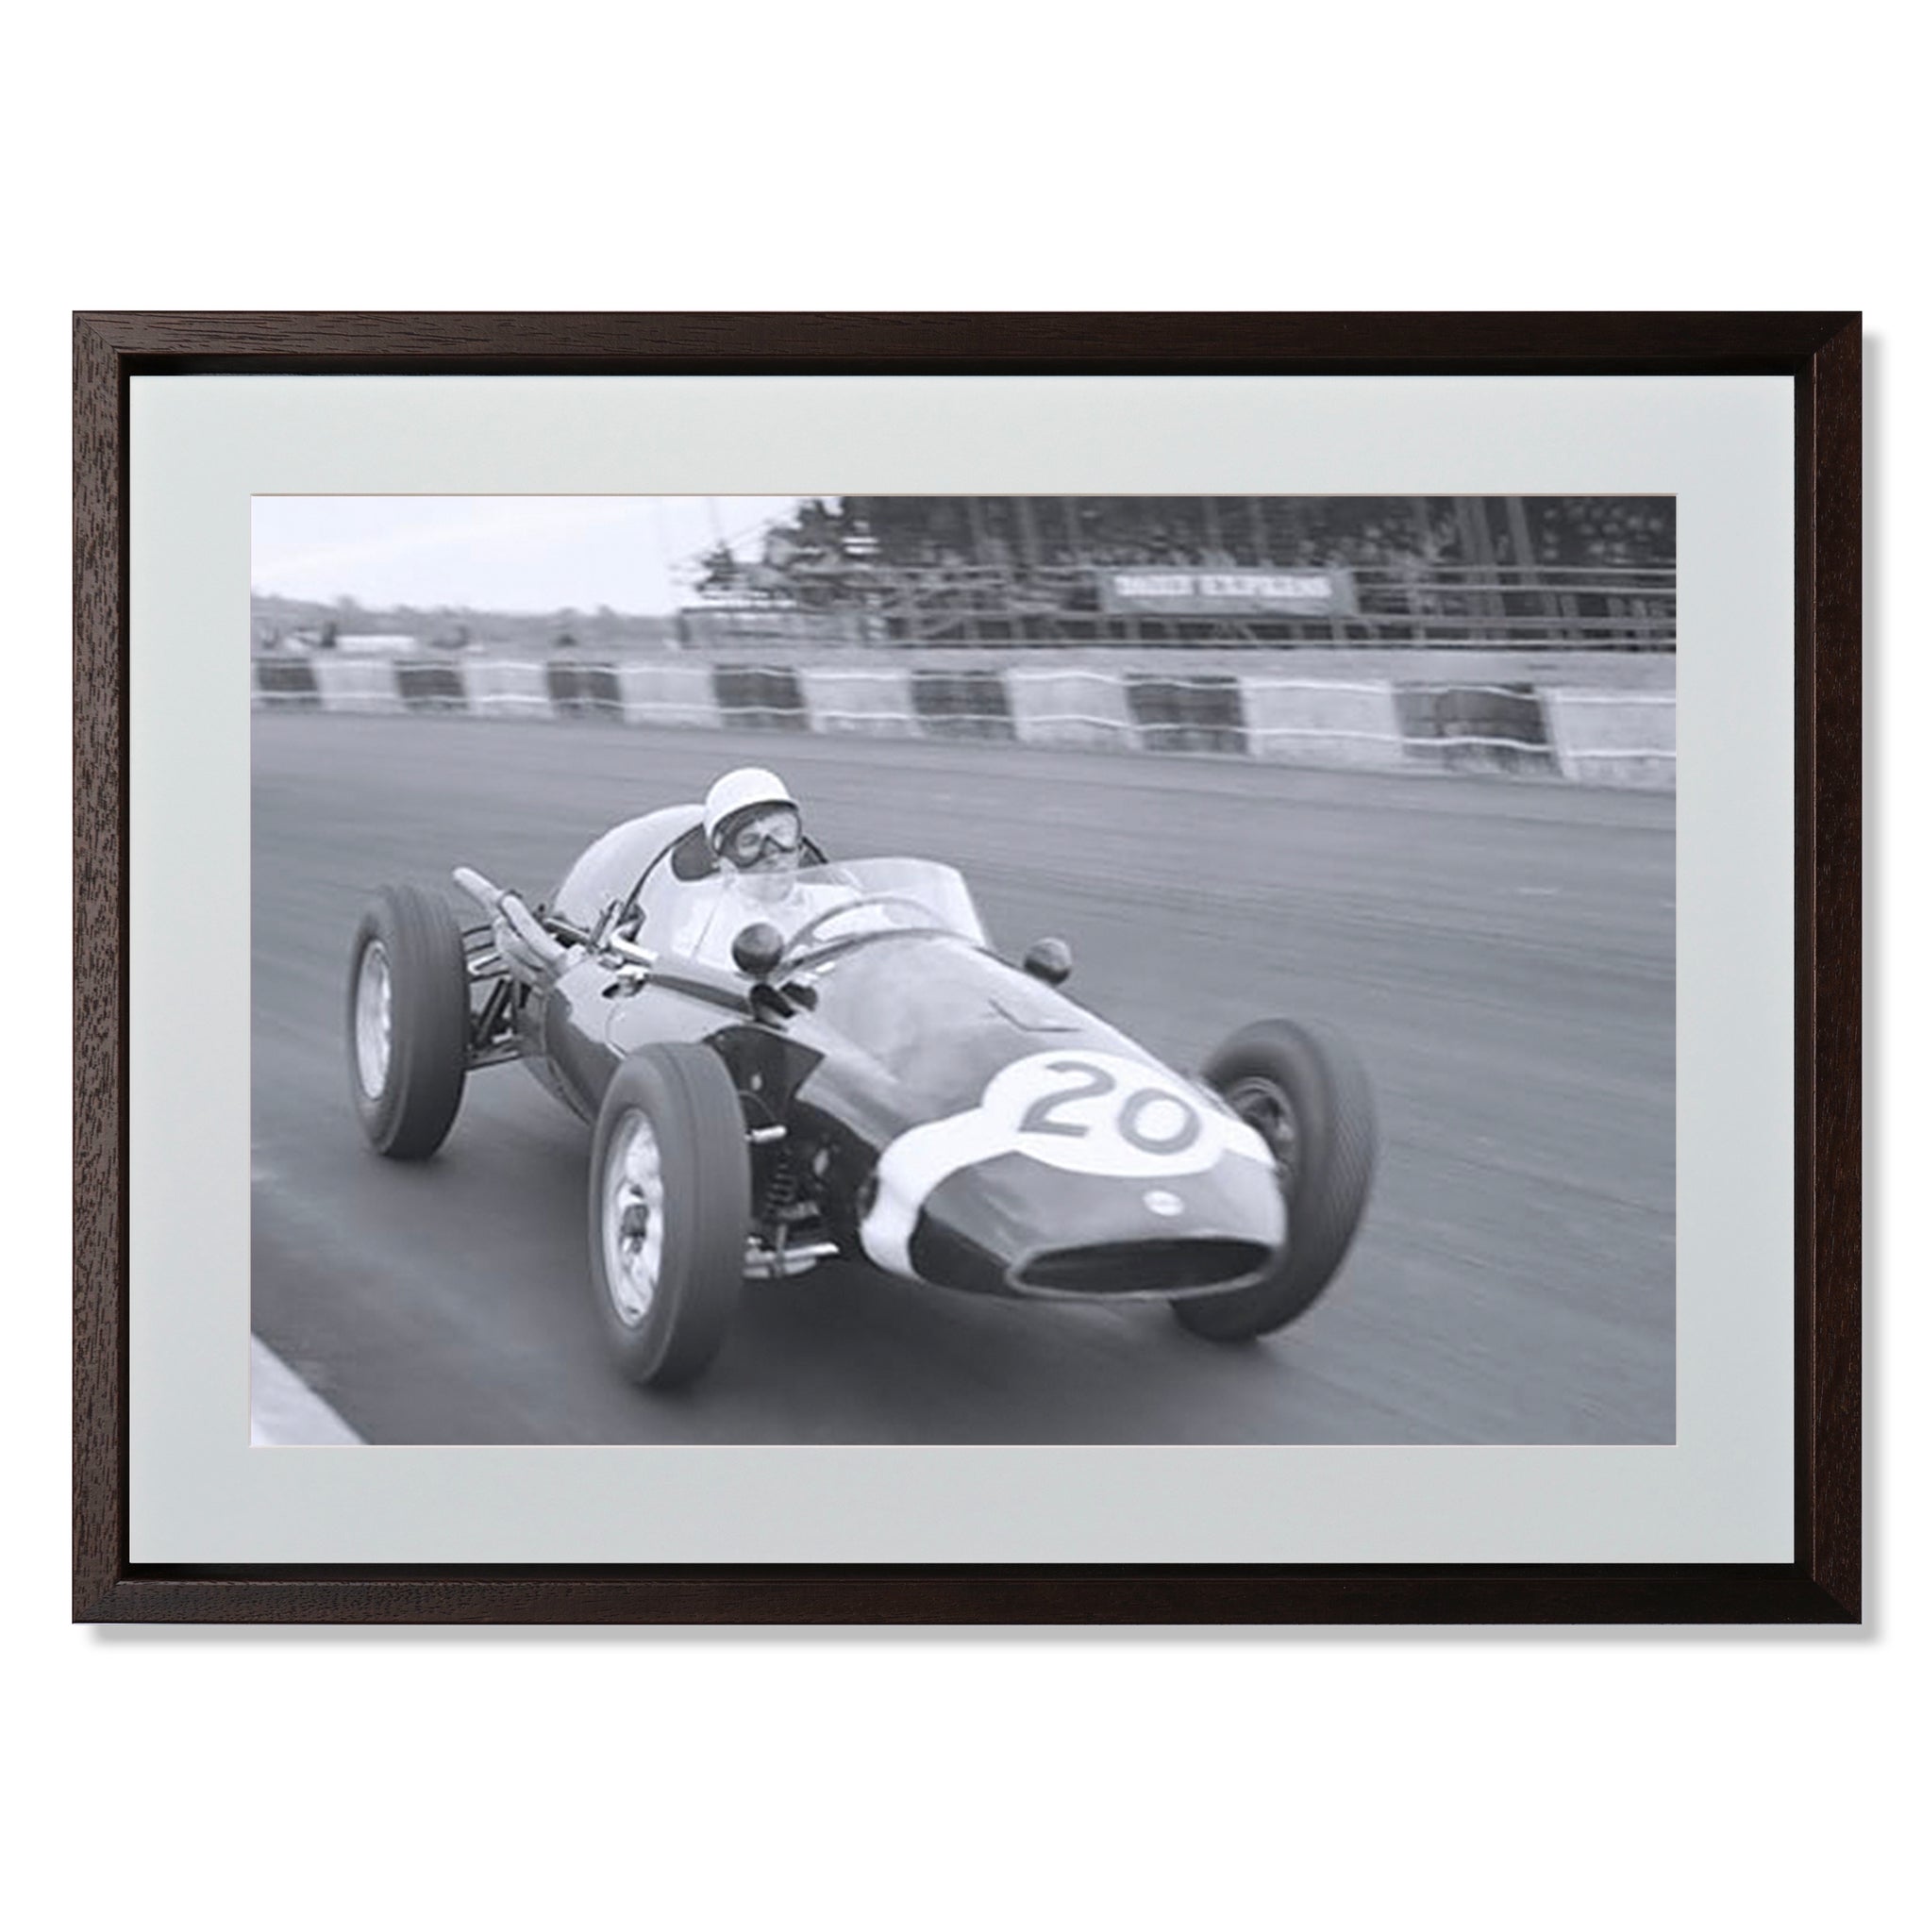 Stirling Moss cornering Silverstone